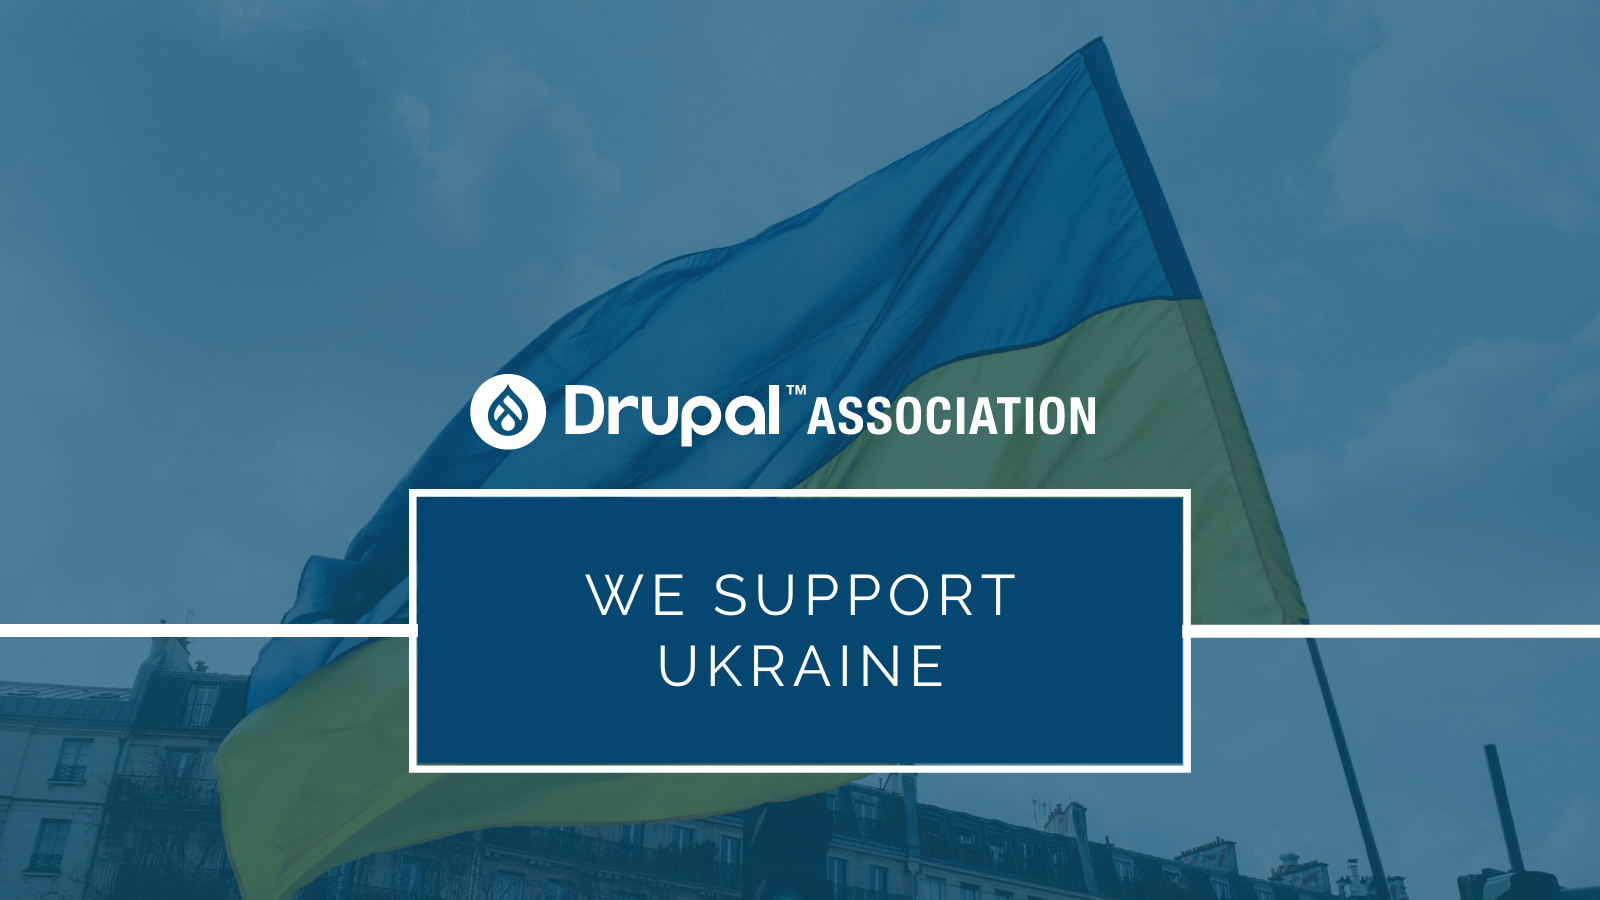 We support Ukraine.